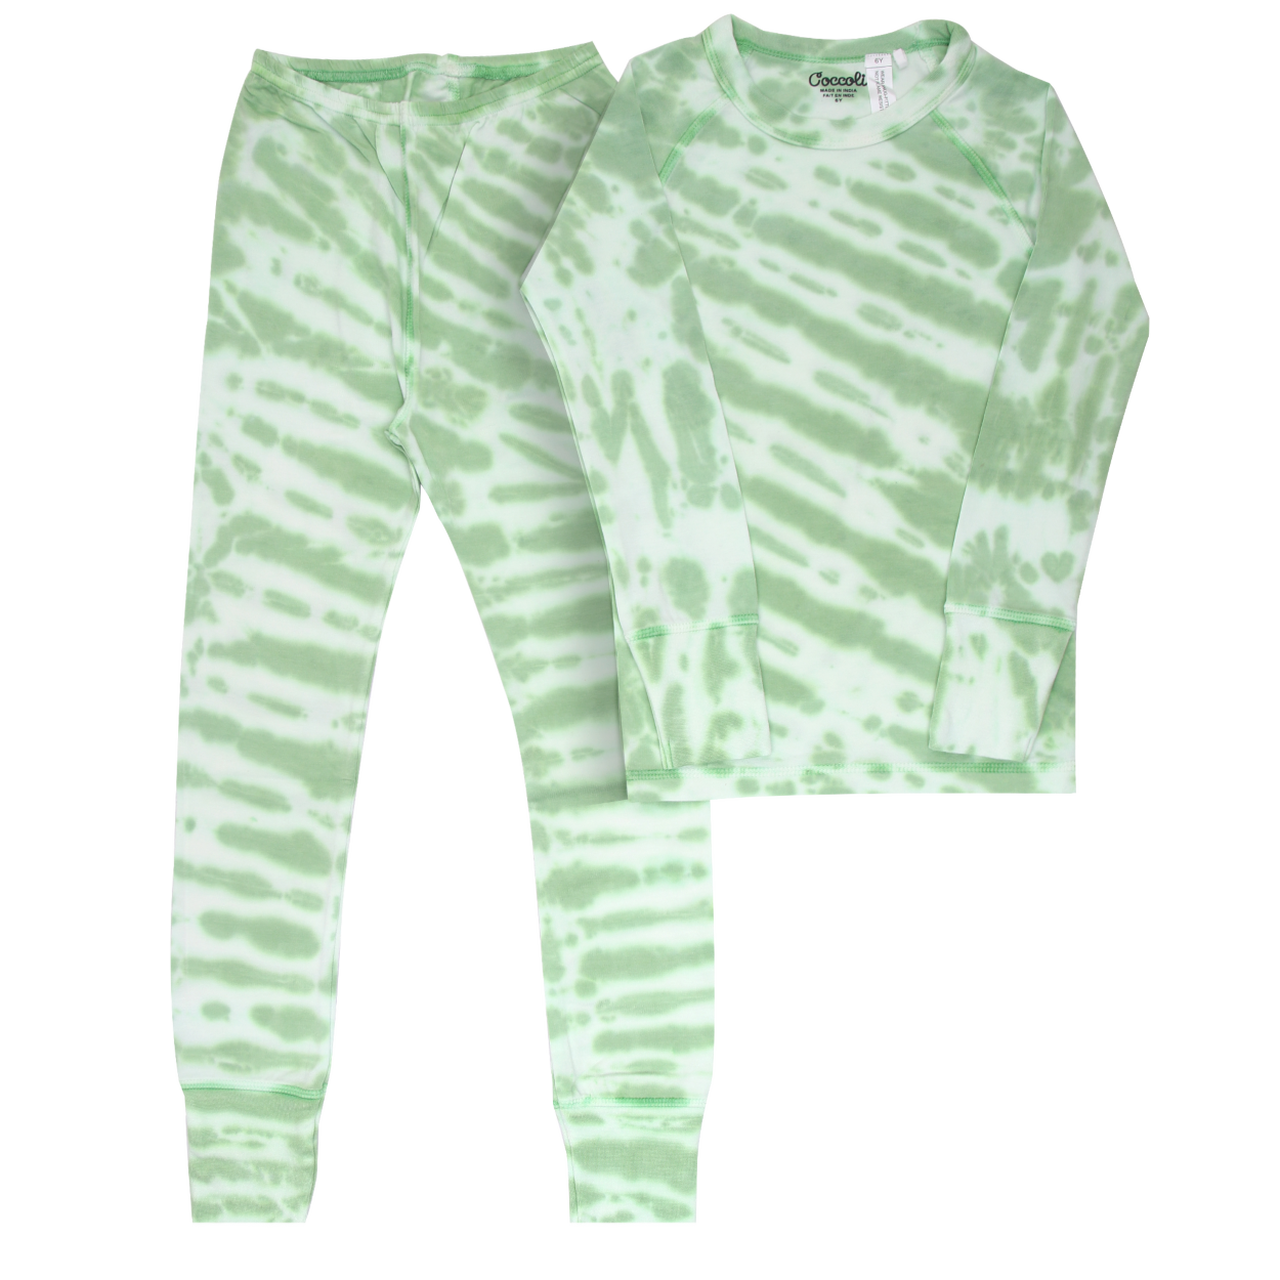 Coccoli - Tencel Jersey Pajamas in Green Tie-Dye